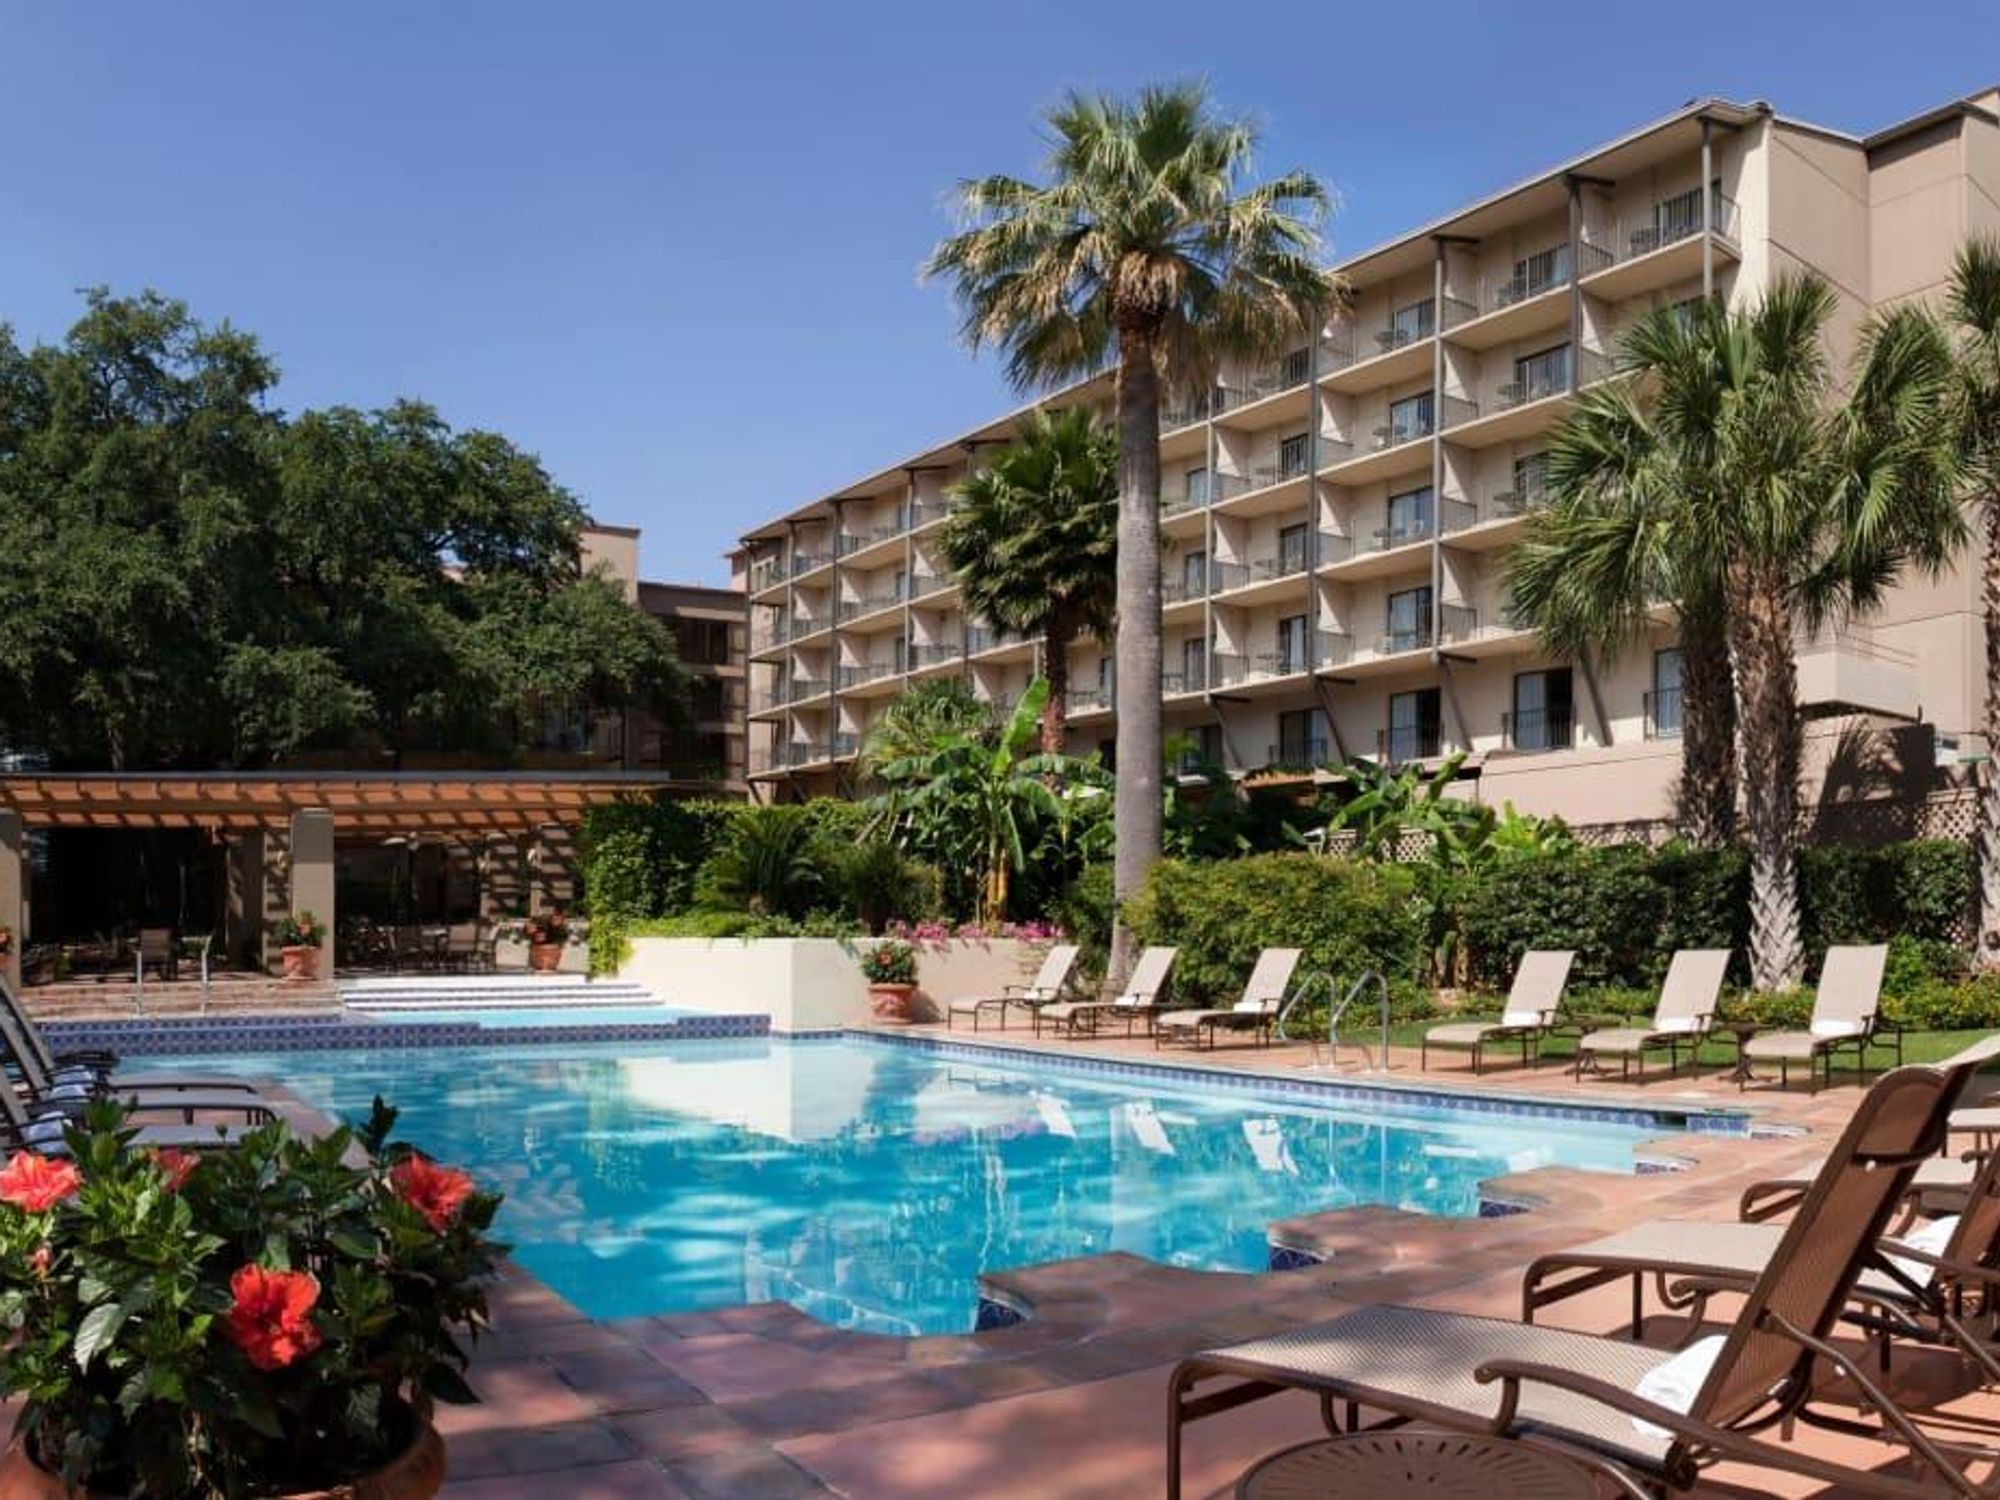 Marriott Plaza Hotel San Antonio River Walk Pools